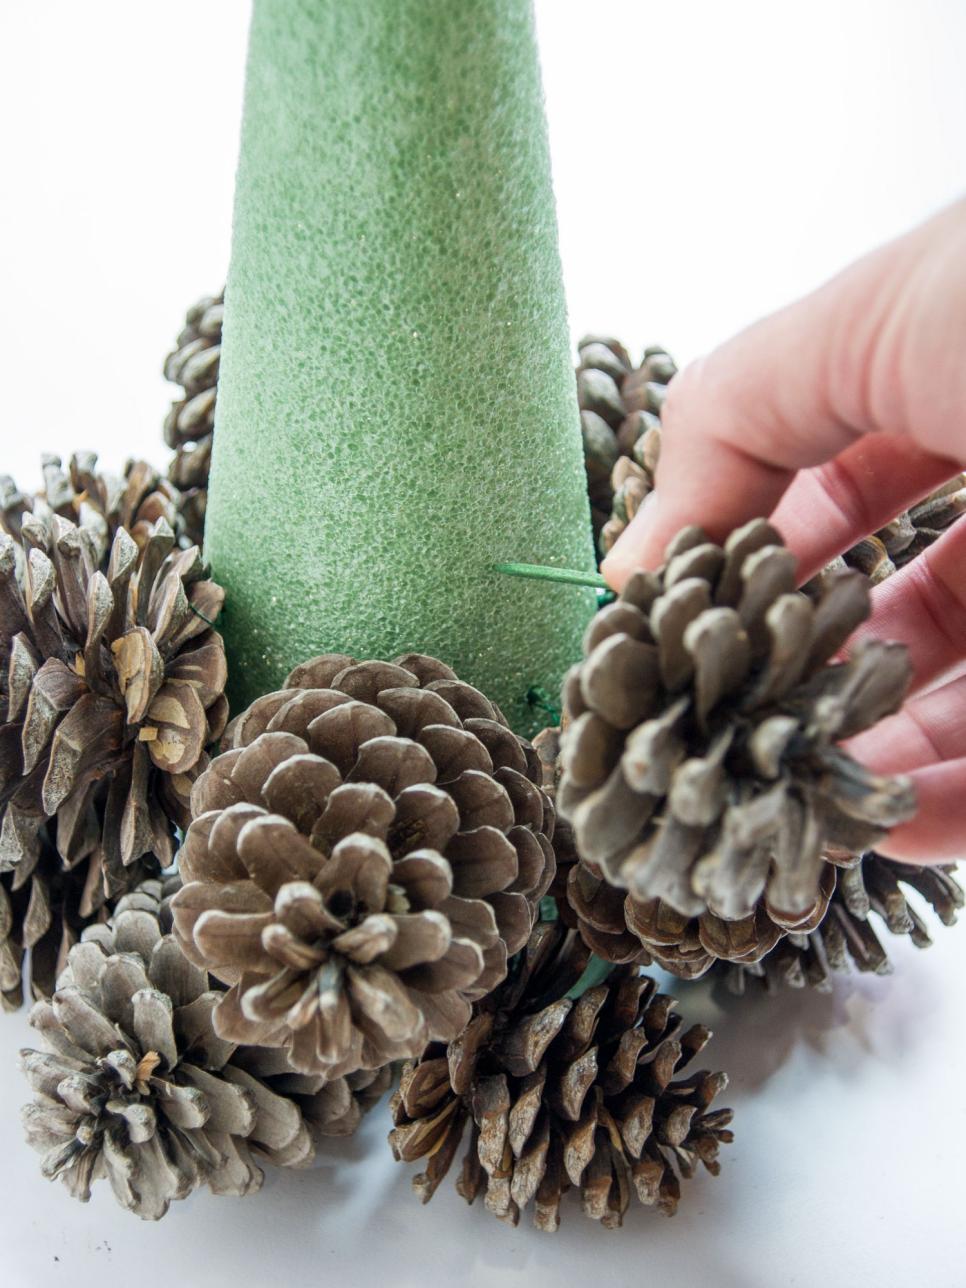 Easy DIY Christmas Pine Cone Decor That Will Amaze Everyone